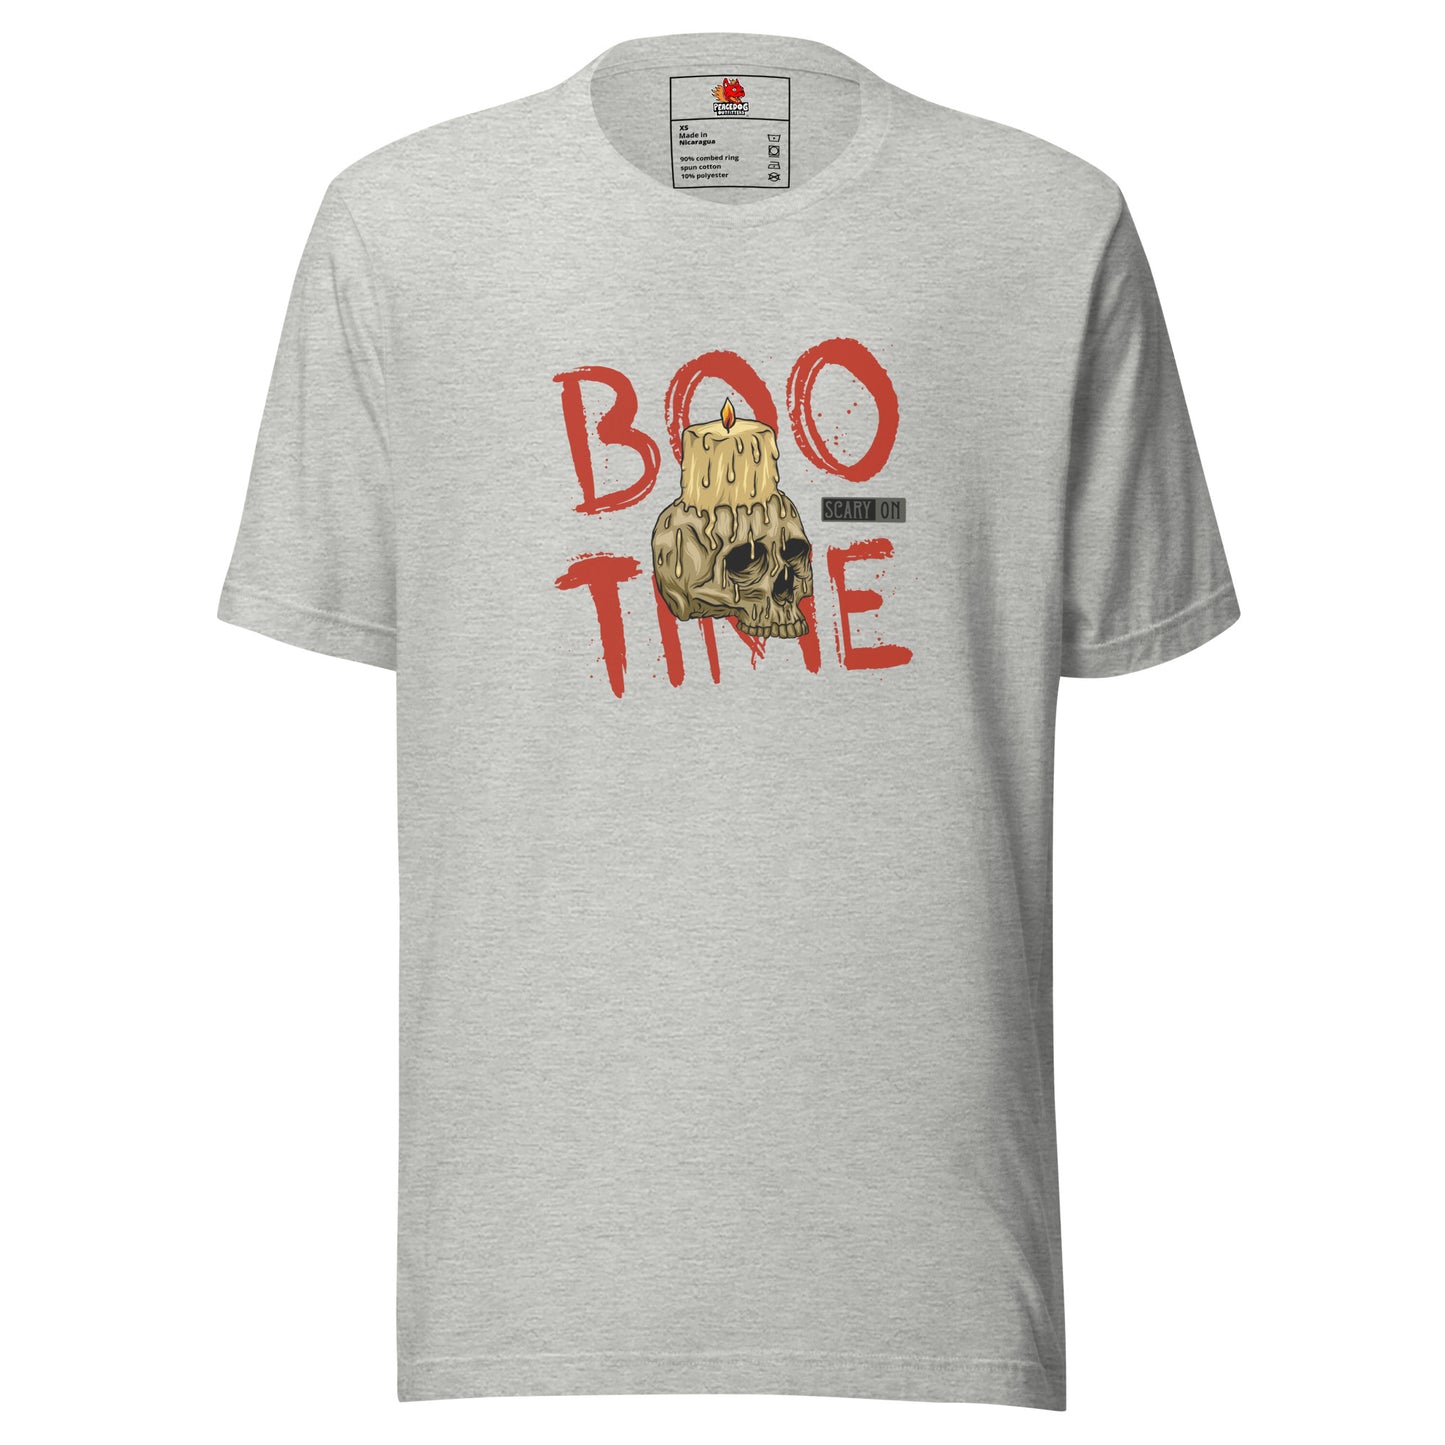 Boo Time T-shirt